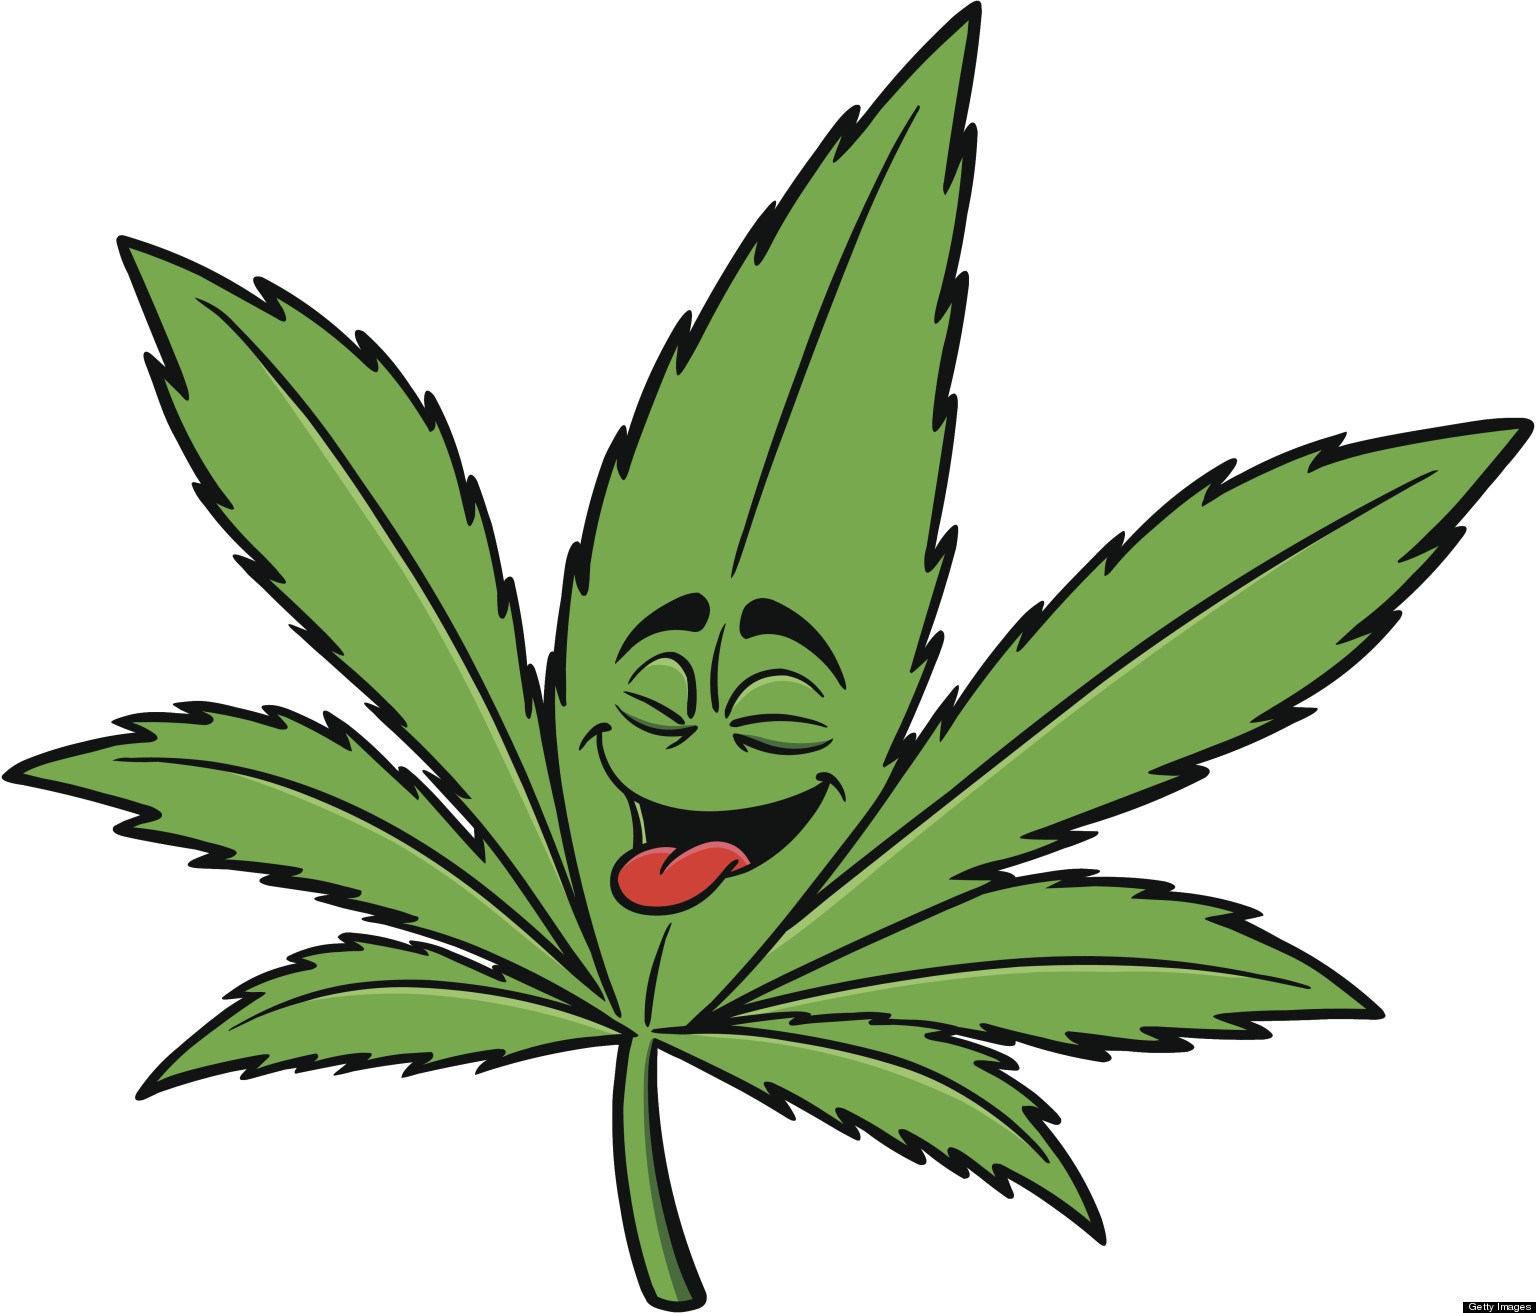 Marijuana leaf circle free cl